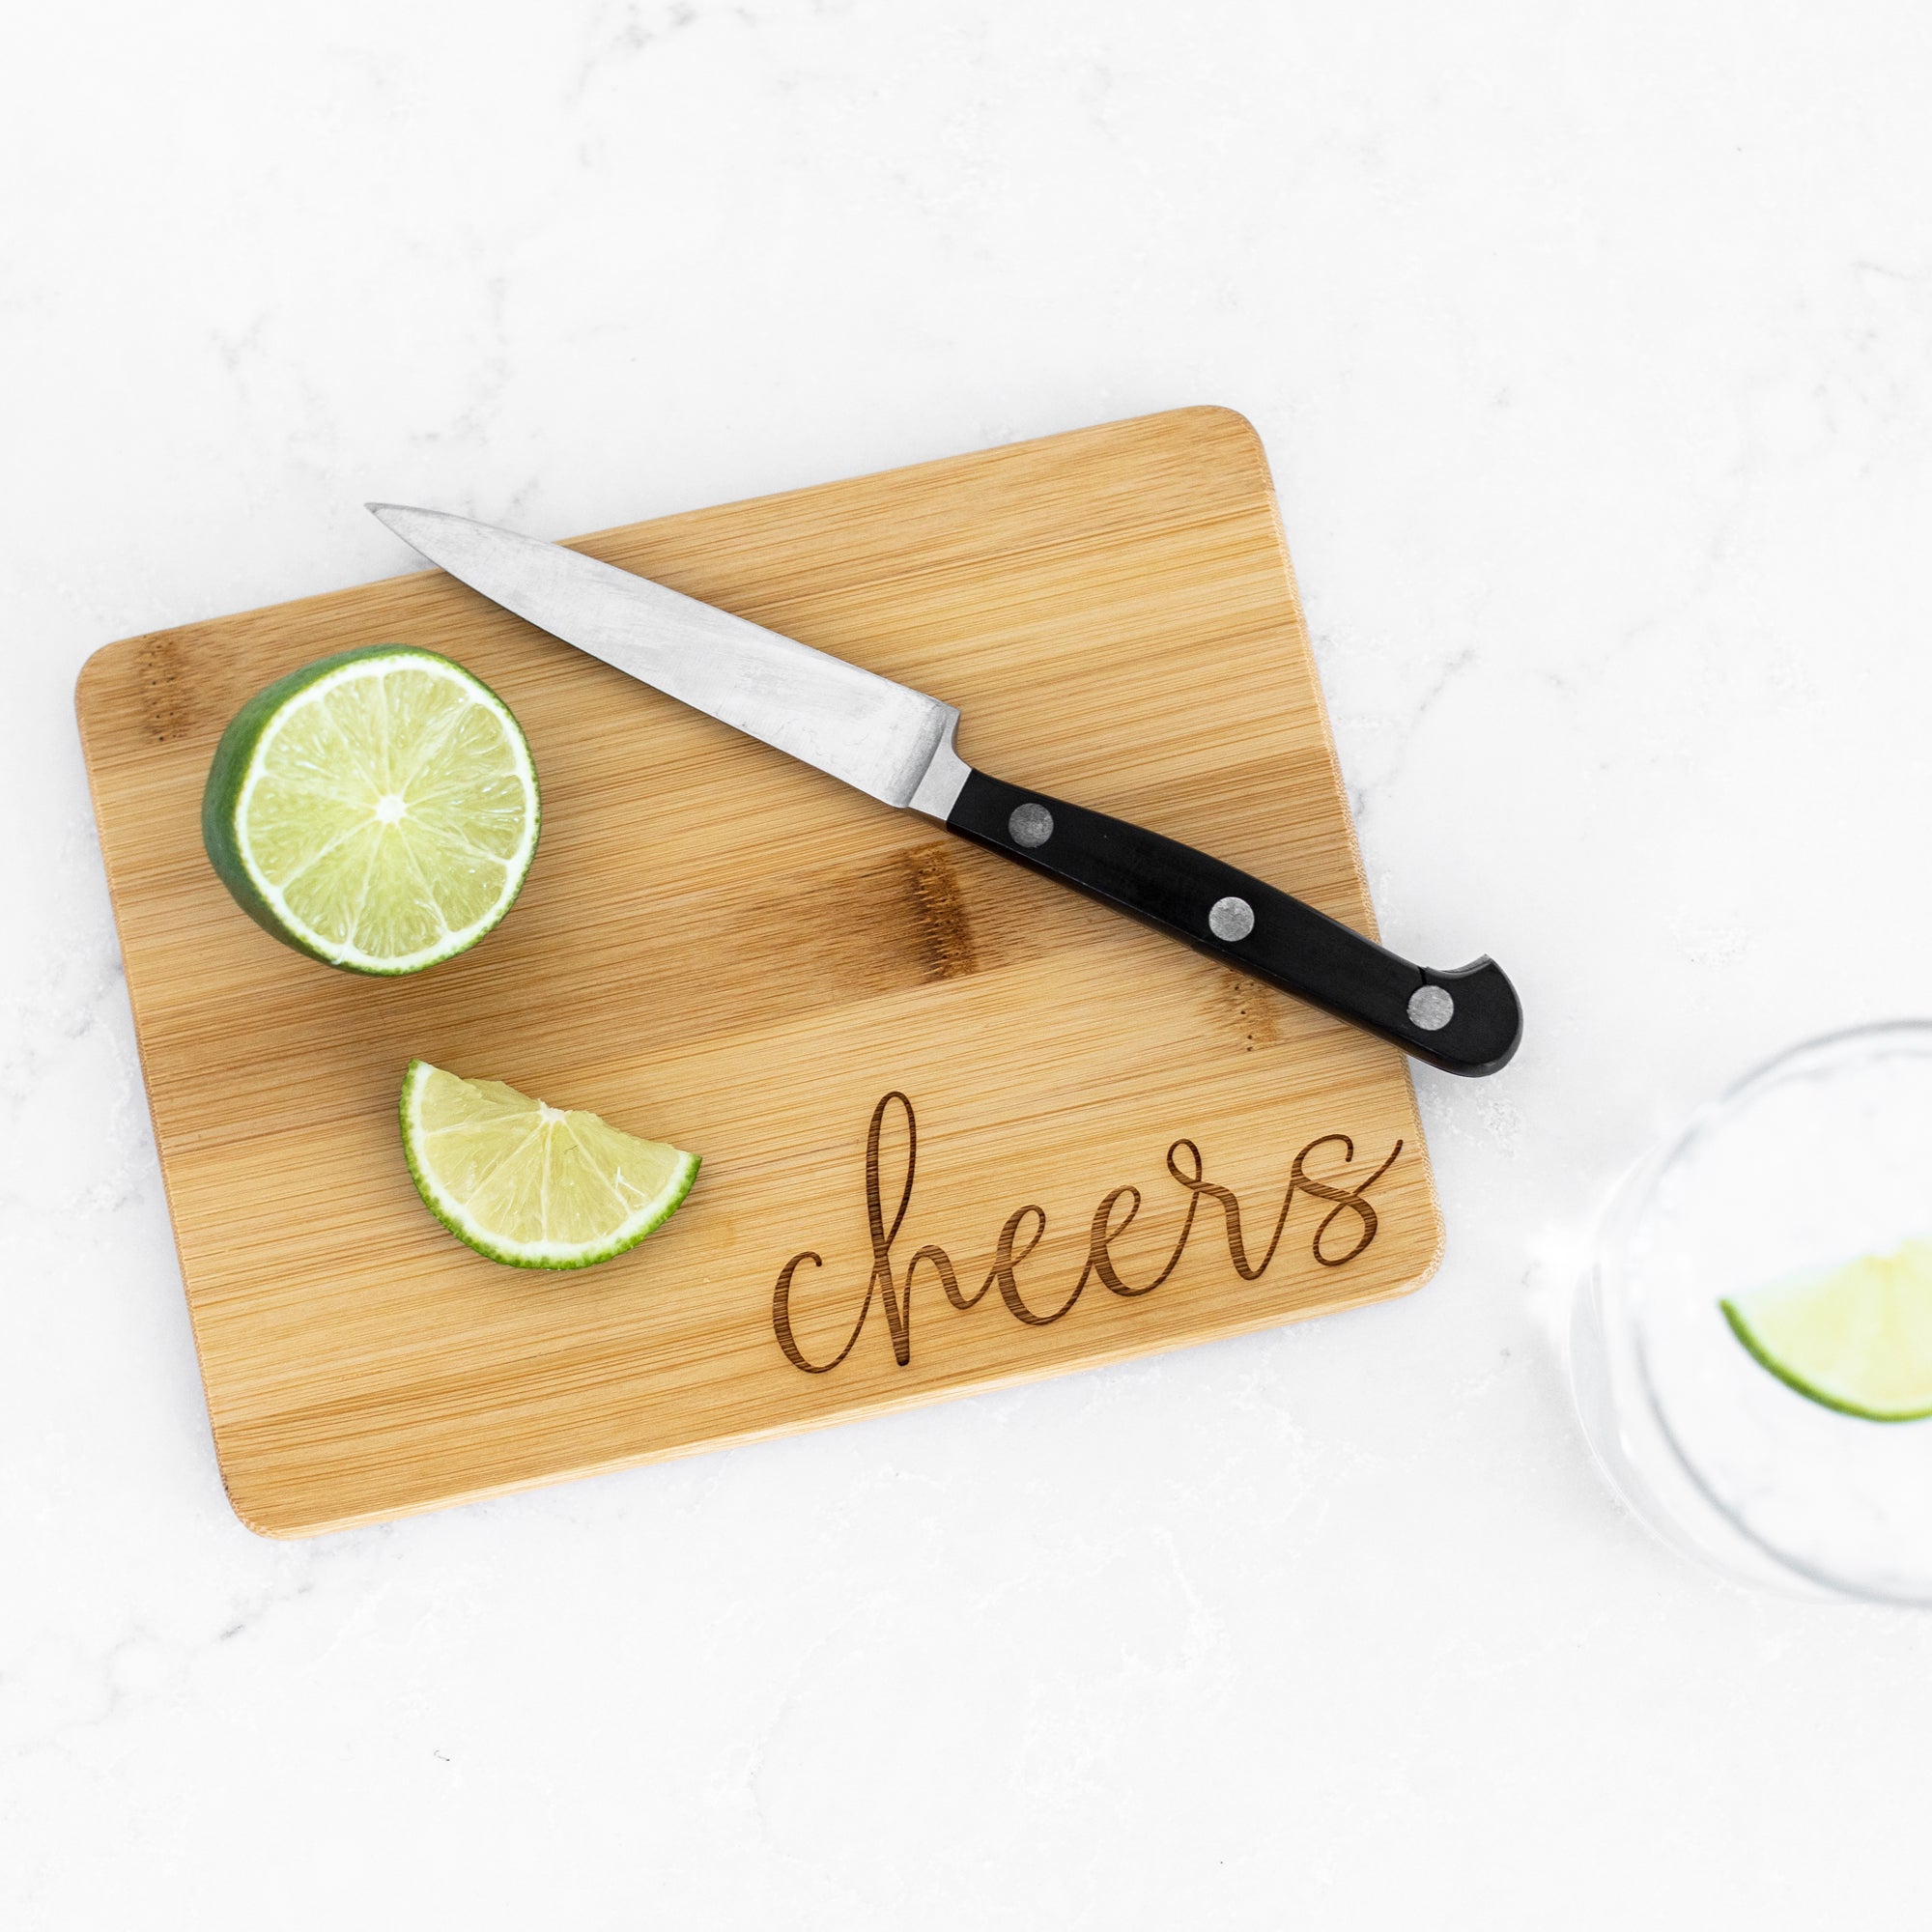 Raise a Glass - Client “Cheers” Bar Gift Set